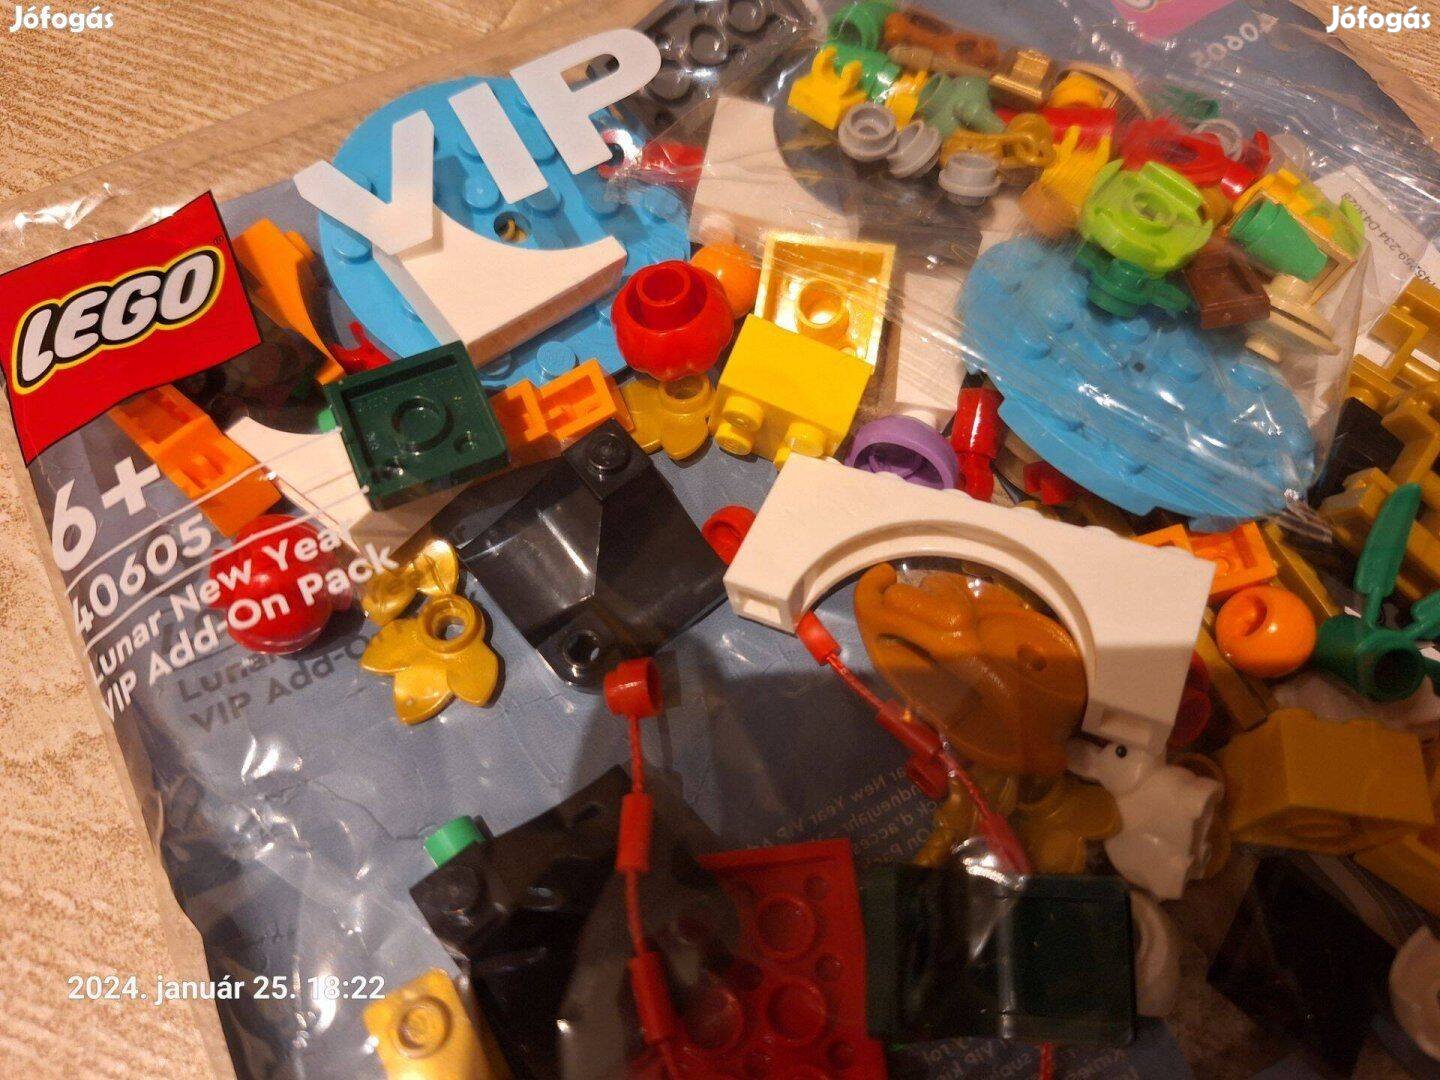 Lego 40605 VIP holdújévi kiegészítő csomag Lunar New Year vip add on s